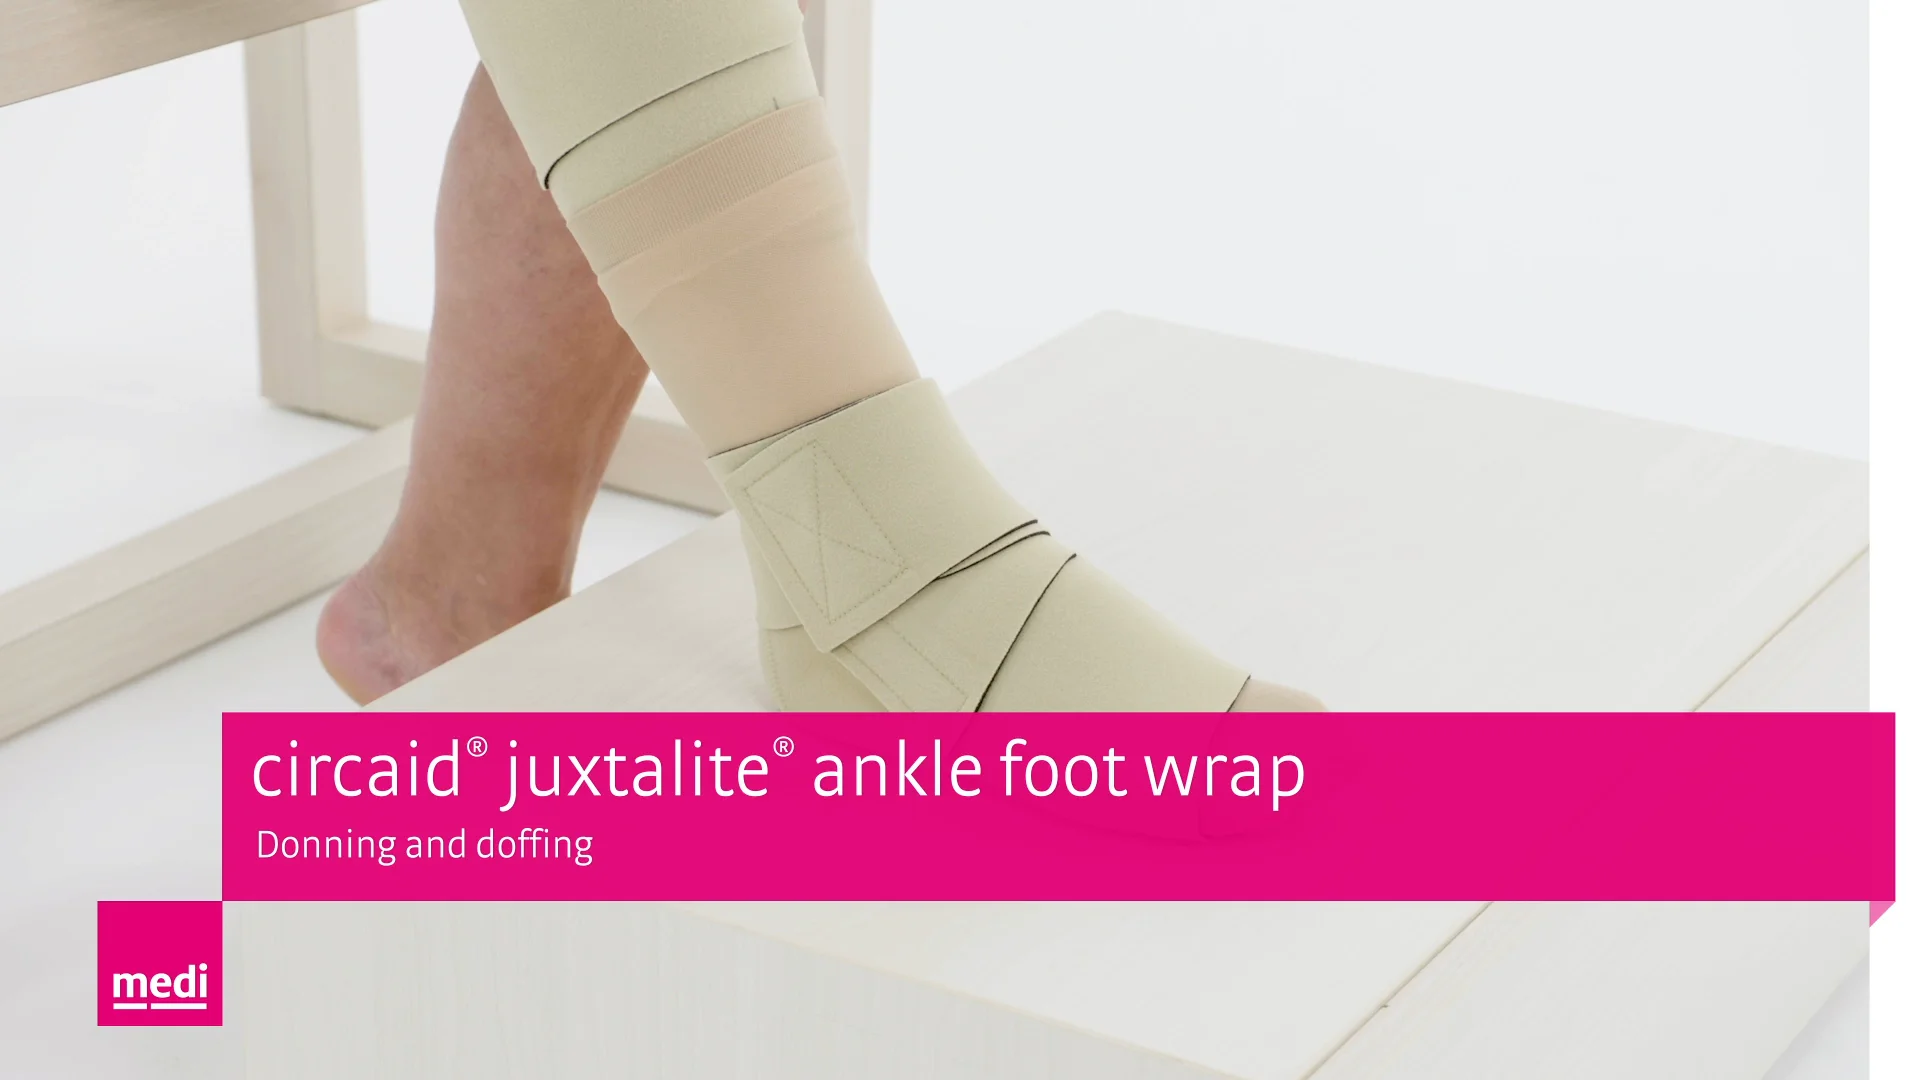 circaid® juxtafit® premium interlocking ankle foot wrap – Donning and  doffing on Vimeo